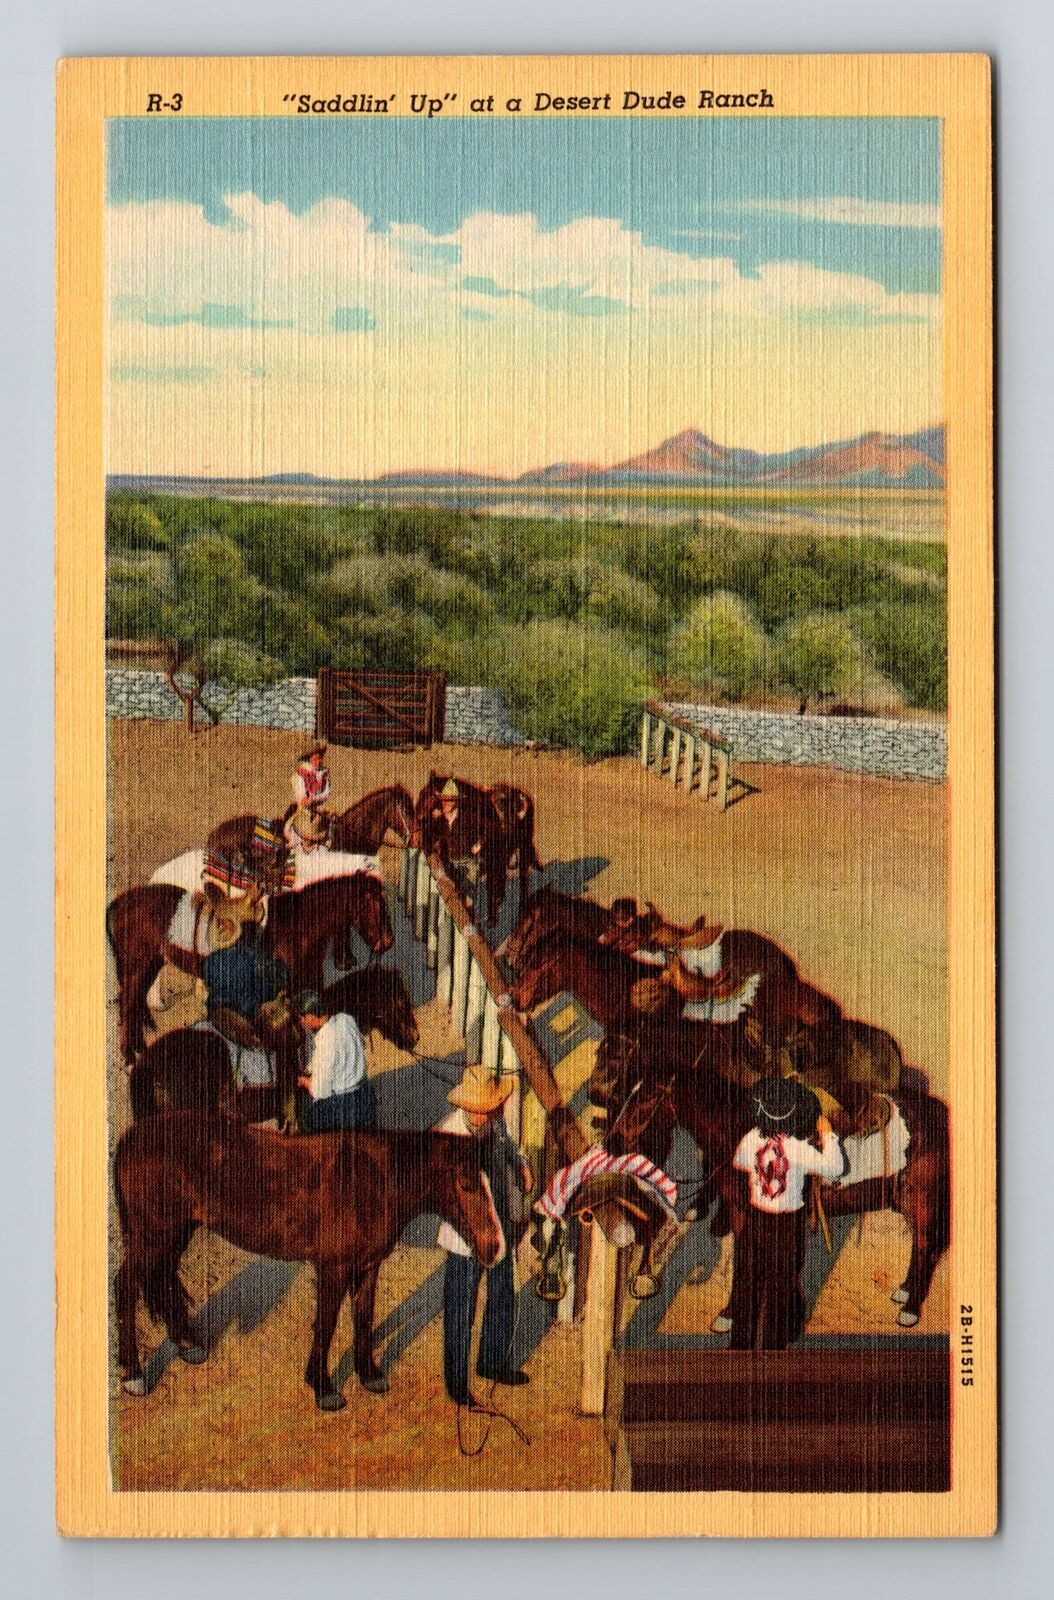 AZ-Arizona, Saddlin Up At A Desert Dude Ranch, Antique, Vintage Postcard